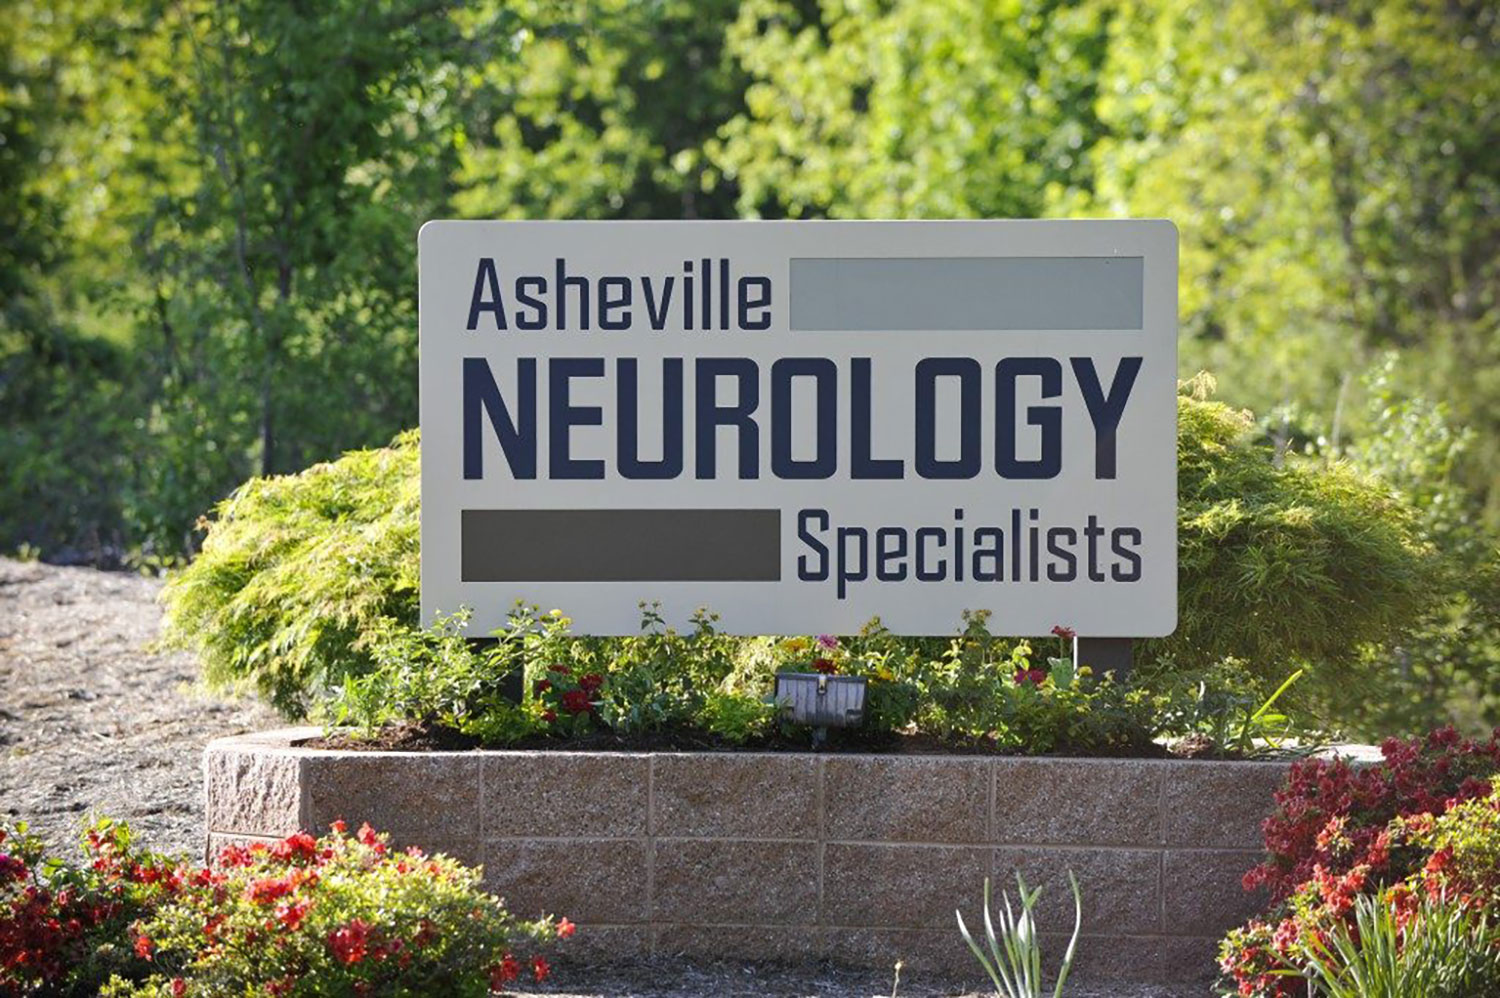 Asheville Neurology Specialists sign